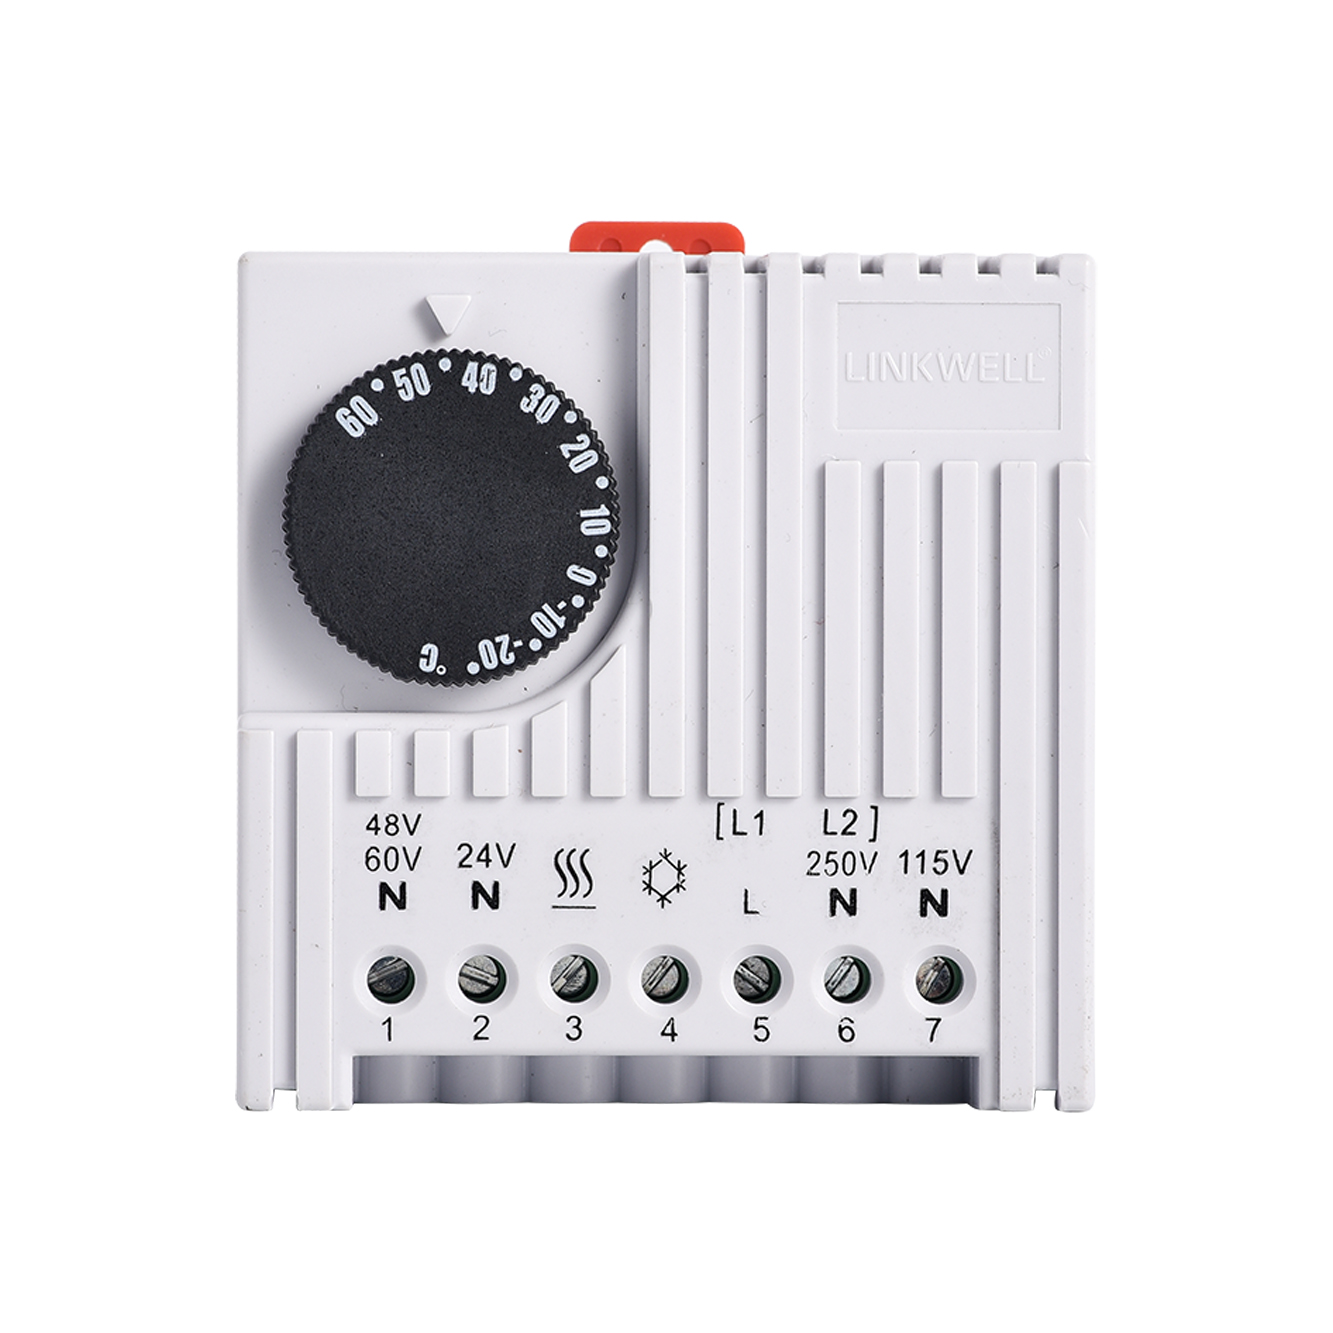 Electronic automatic constant temperature temperature controller